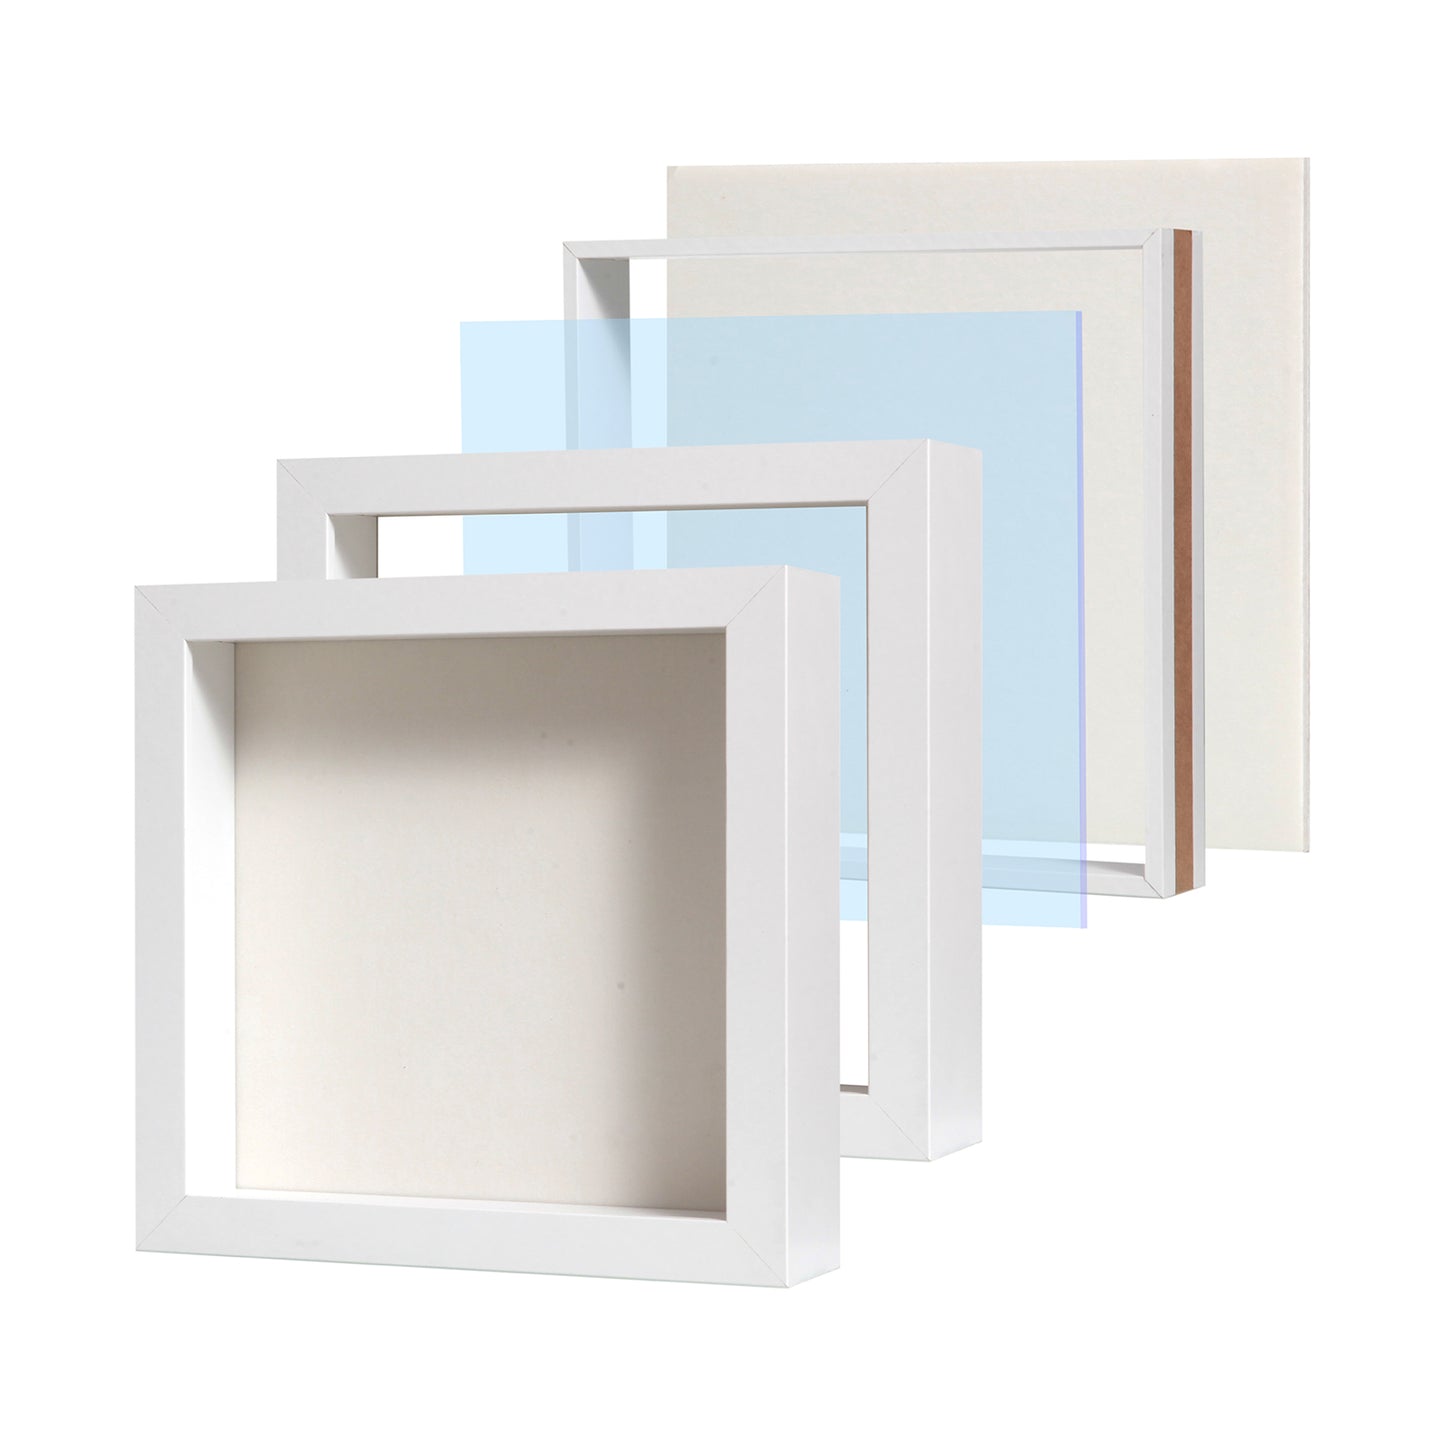 8" x 8” White MDF Wood Shadow Box Frame